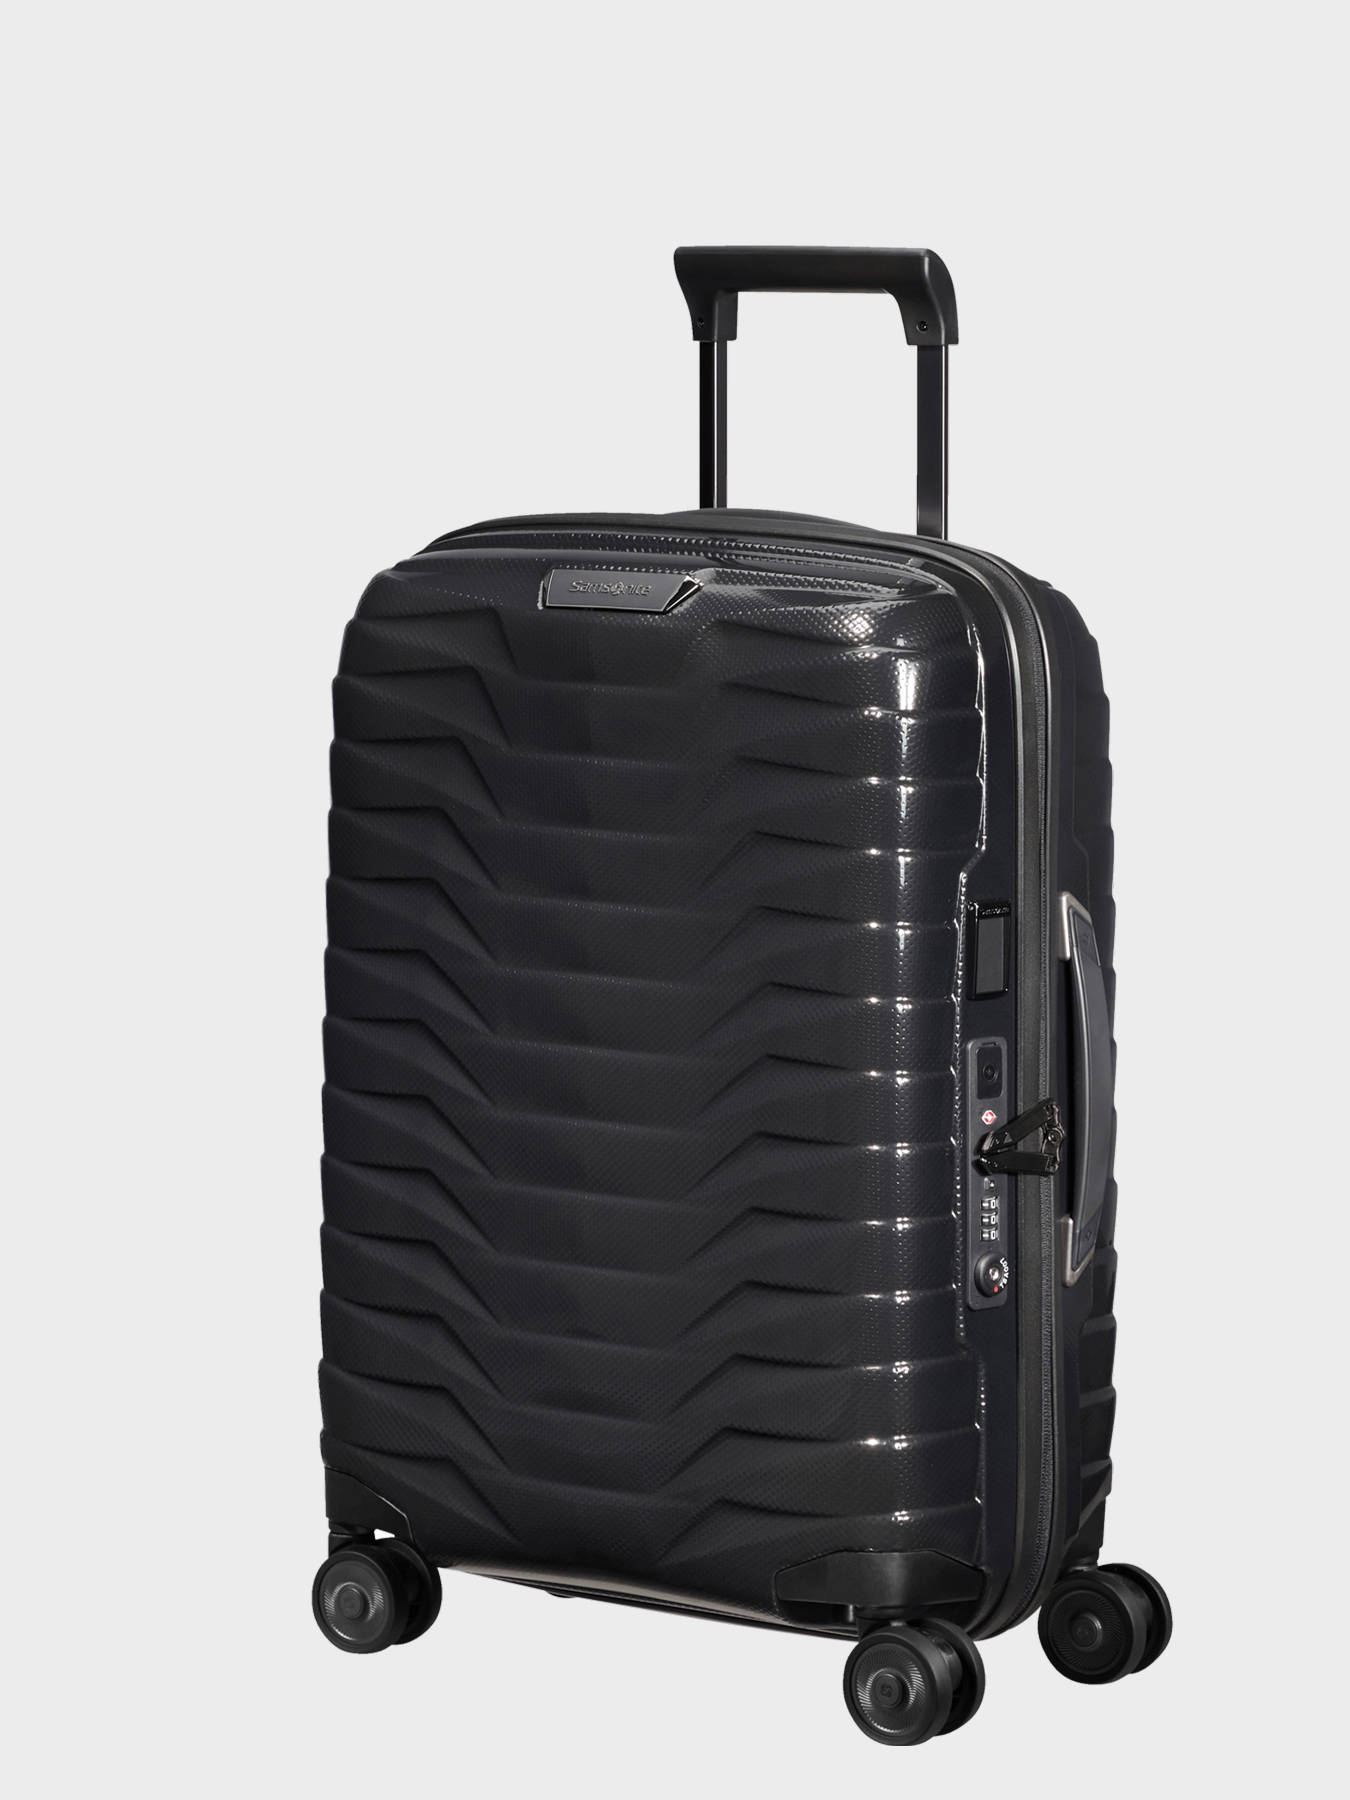 Samsonite Carry-on-suitcase 140087 / CW6.005 - best prices